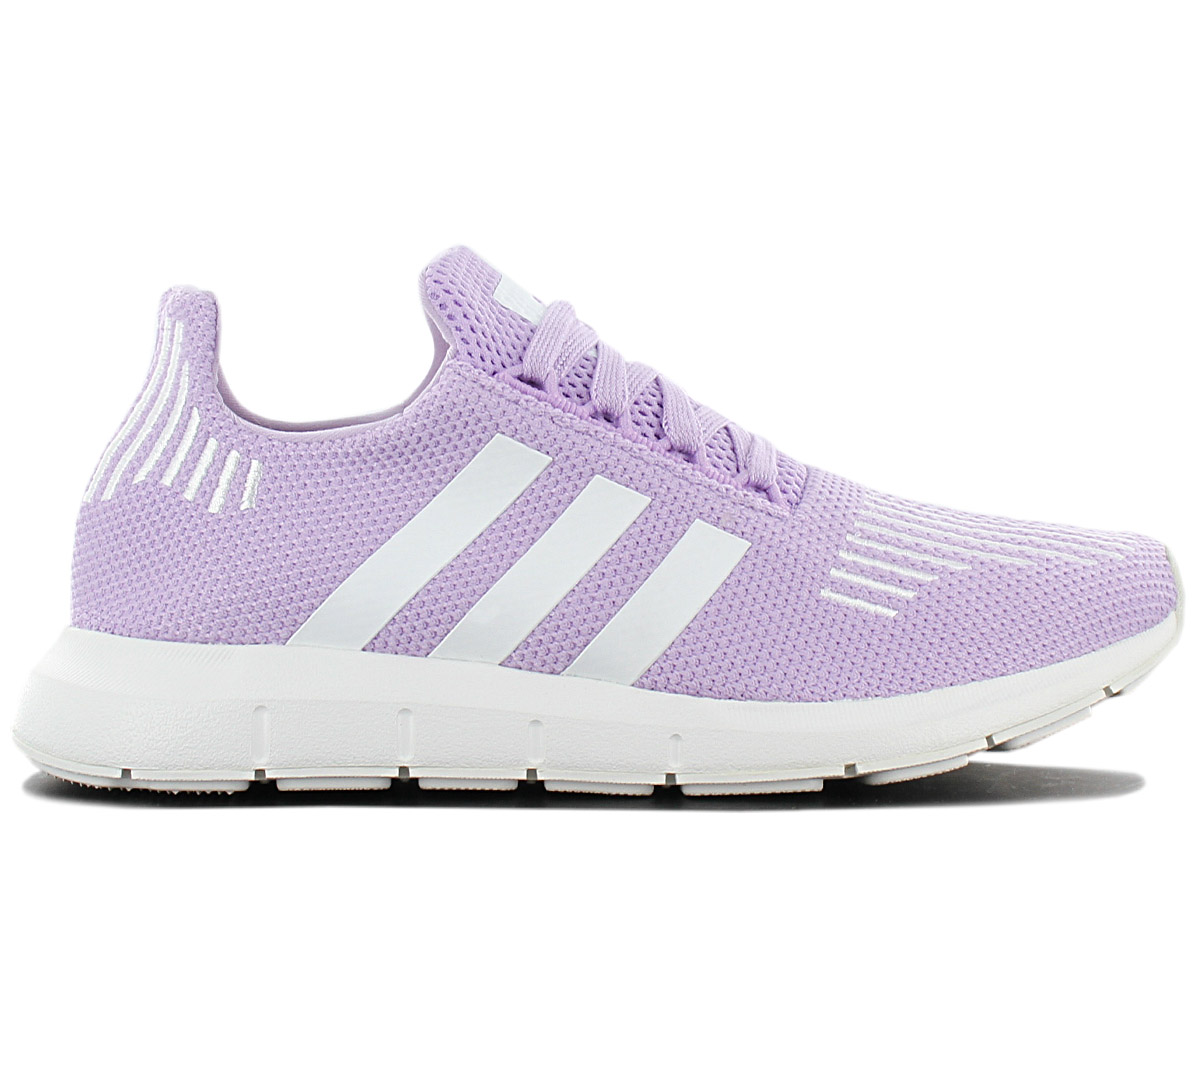 adidas swift run purple womens shoes